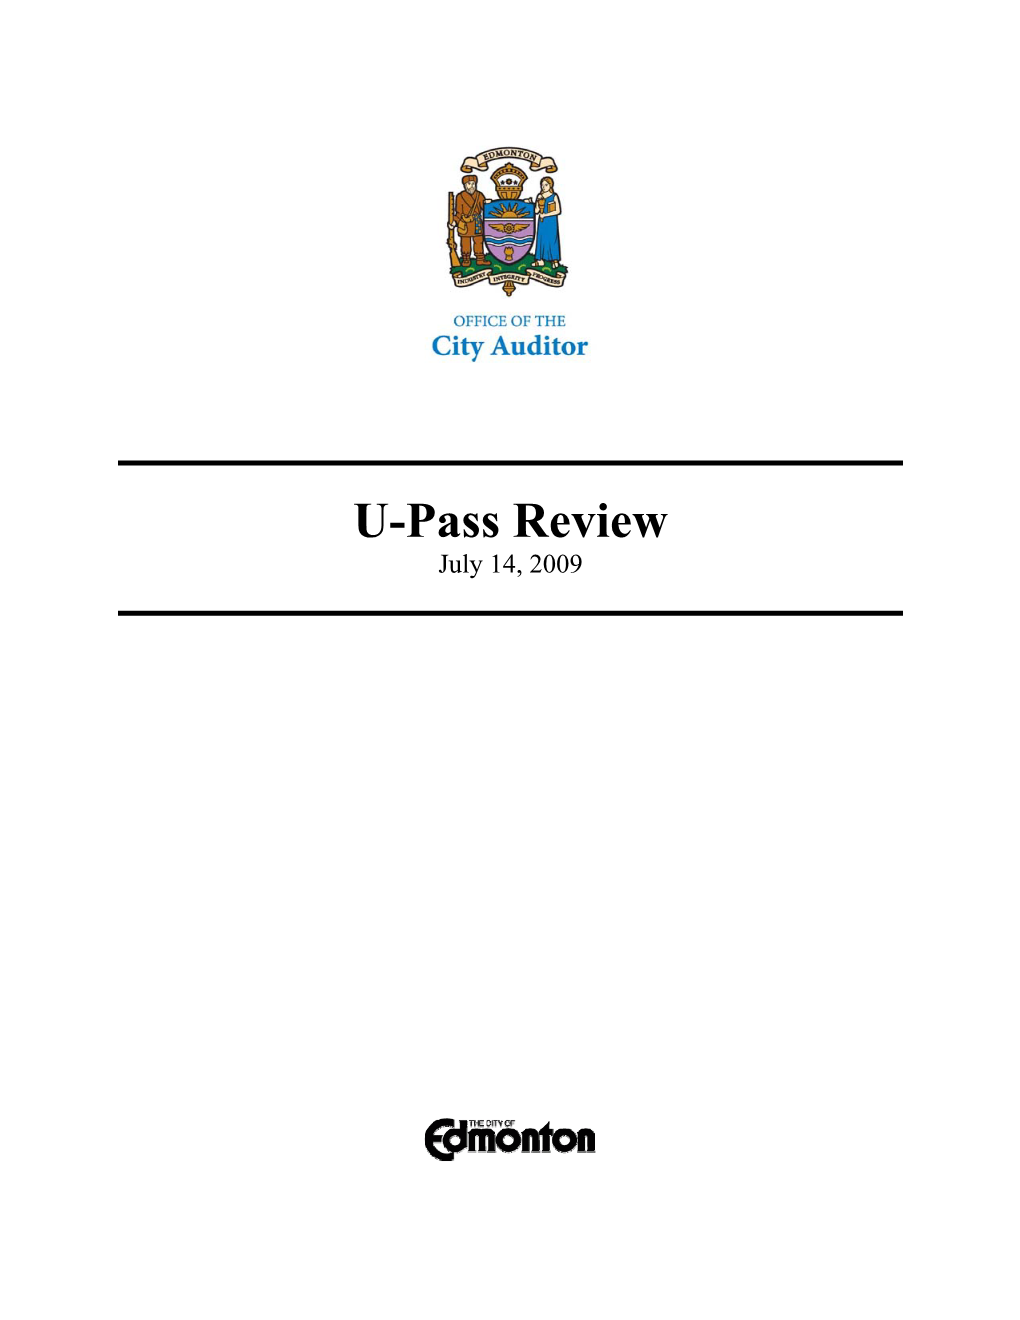 U-Pass Review July 14, 2009